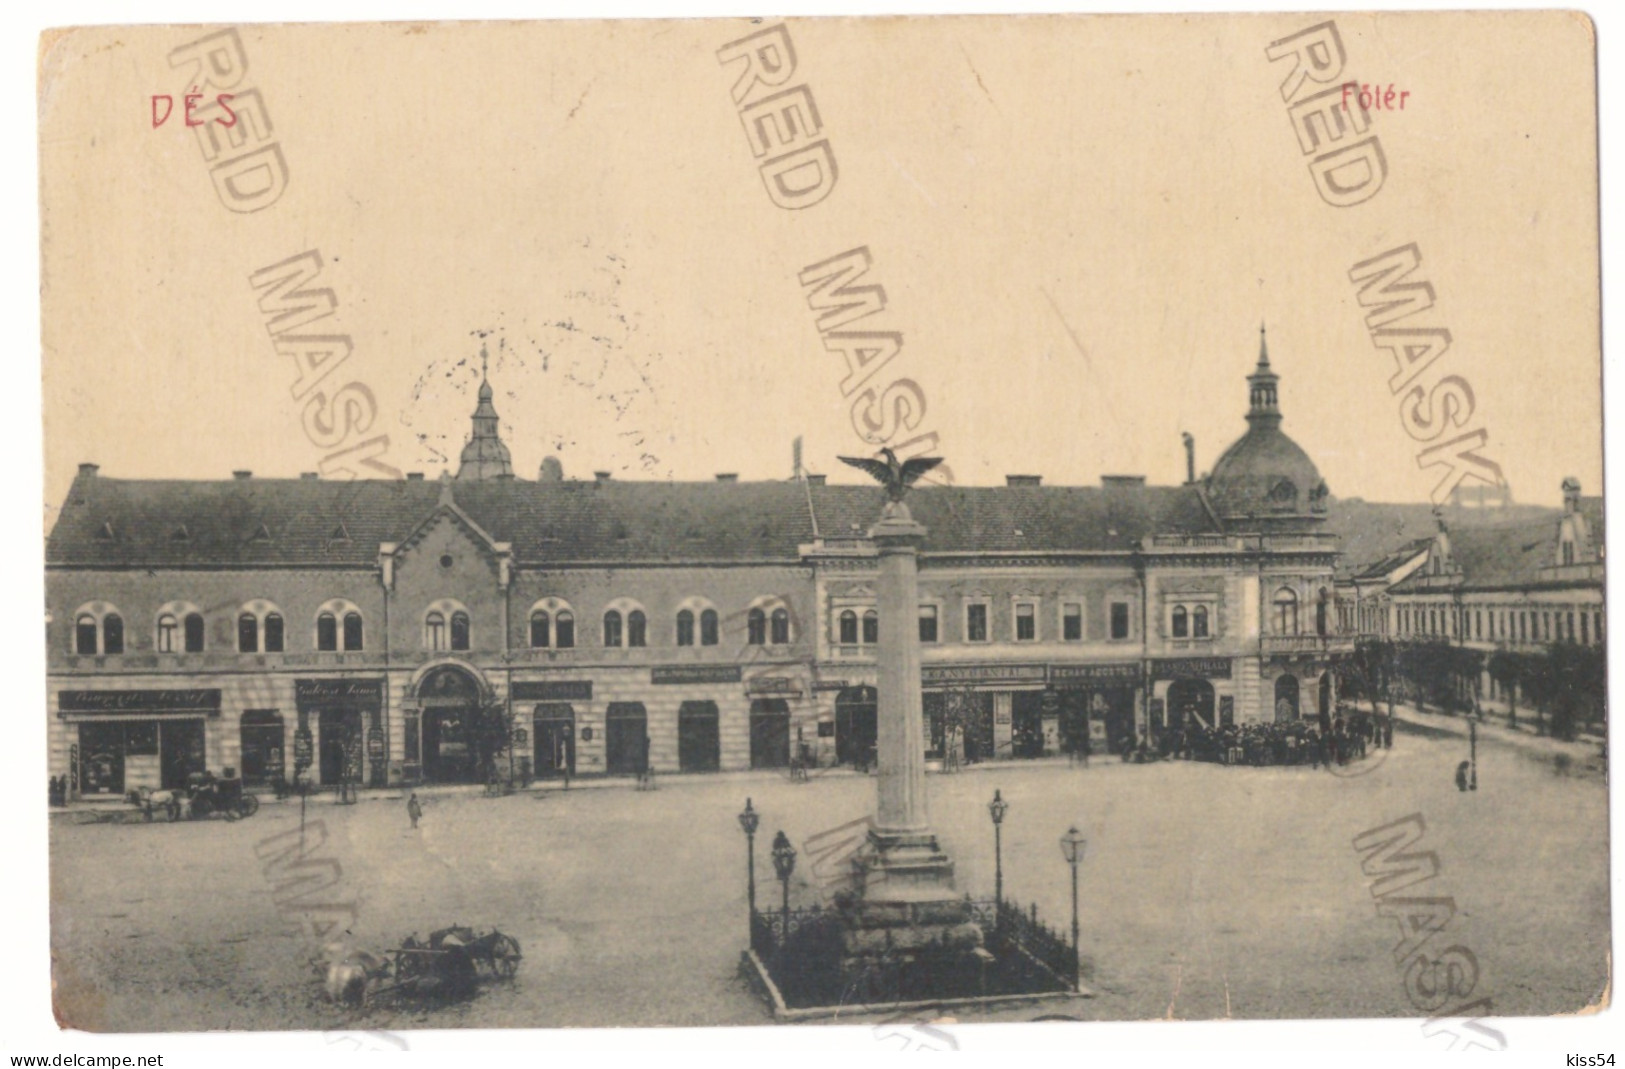 RO 999 - 22253 DEJ, Cluj, Market, Romania - Old Postcard - Used - 1908 - Romania